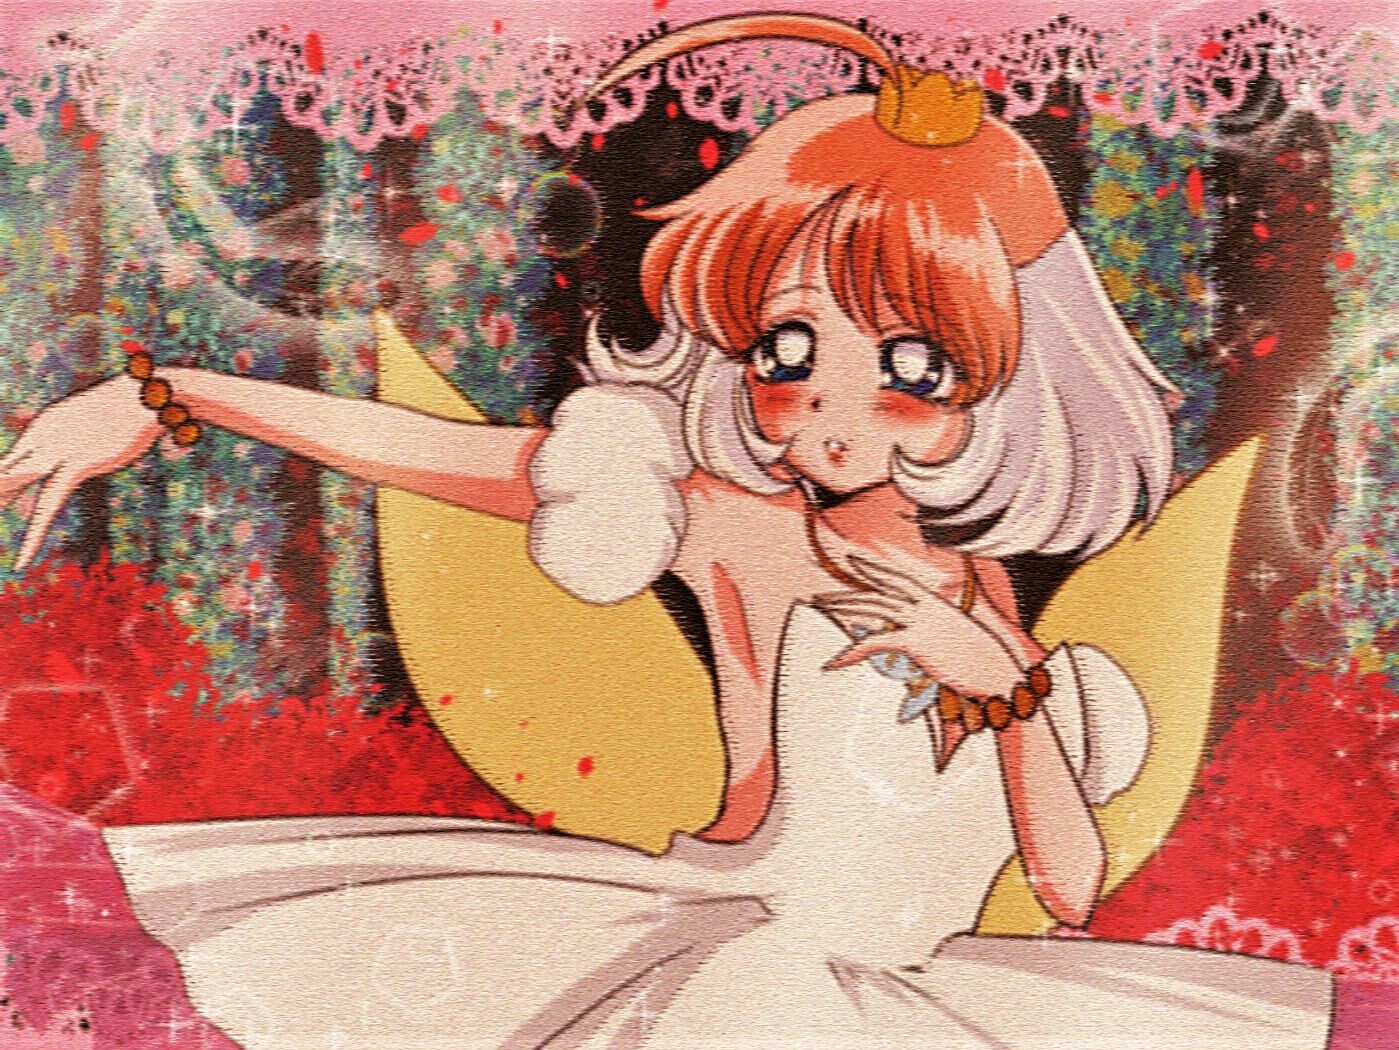 Princess Tutu - 13/14 - Throwback Thursday - Star Crossed Anime